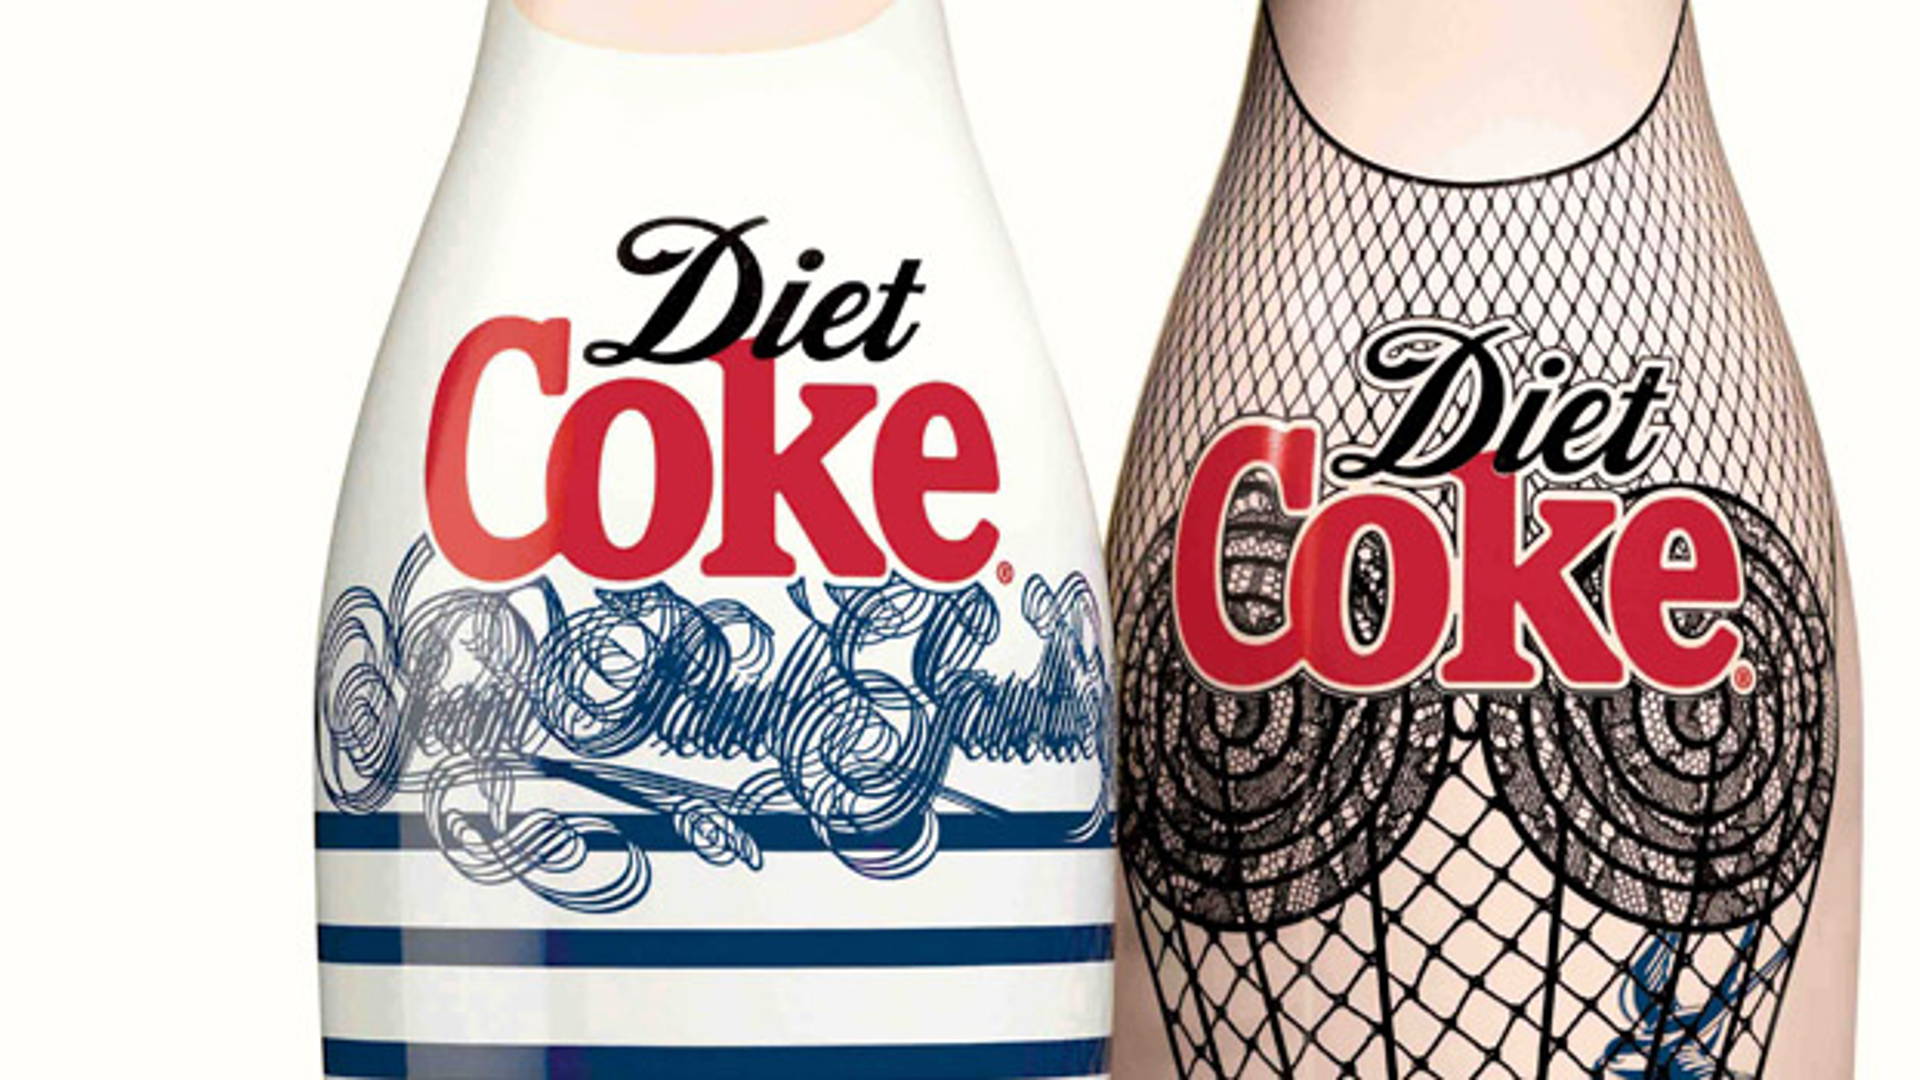 Jean Paul Gaultier for Diet Coke | Dieline - Design, Branding & Packaging  Inspiration